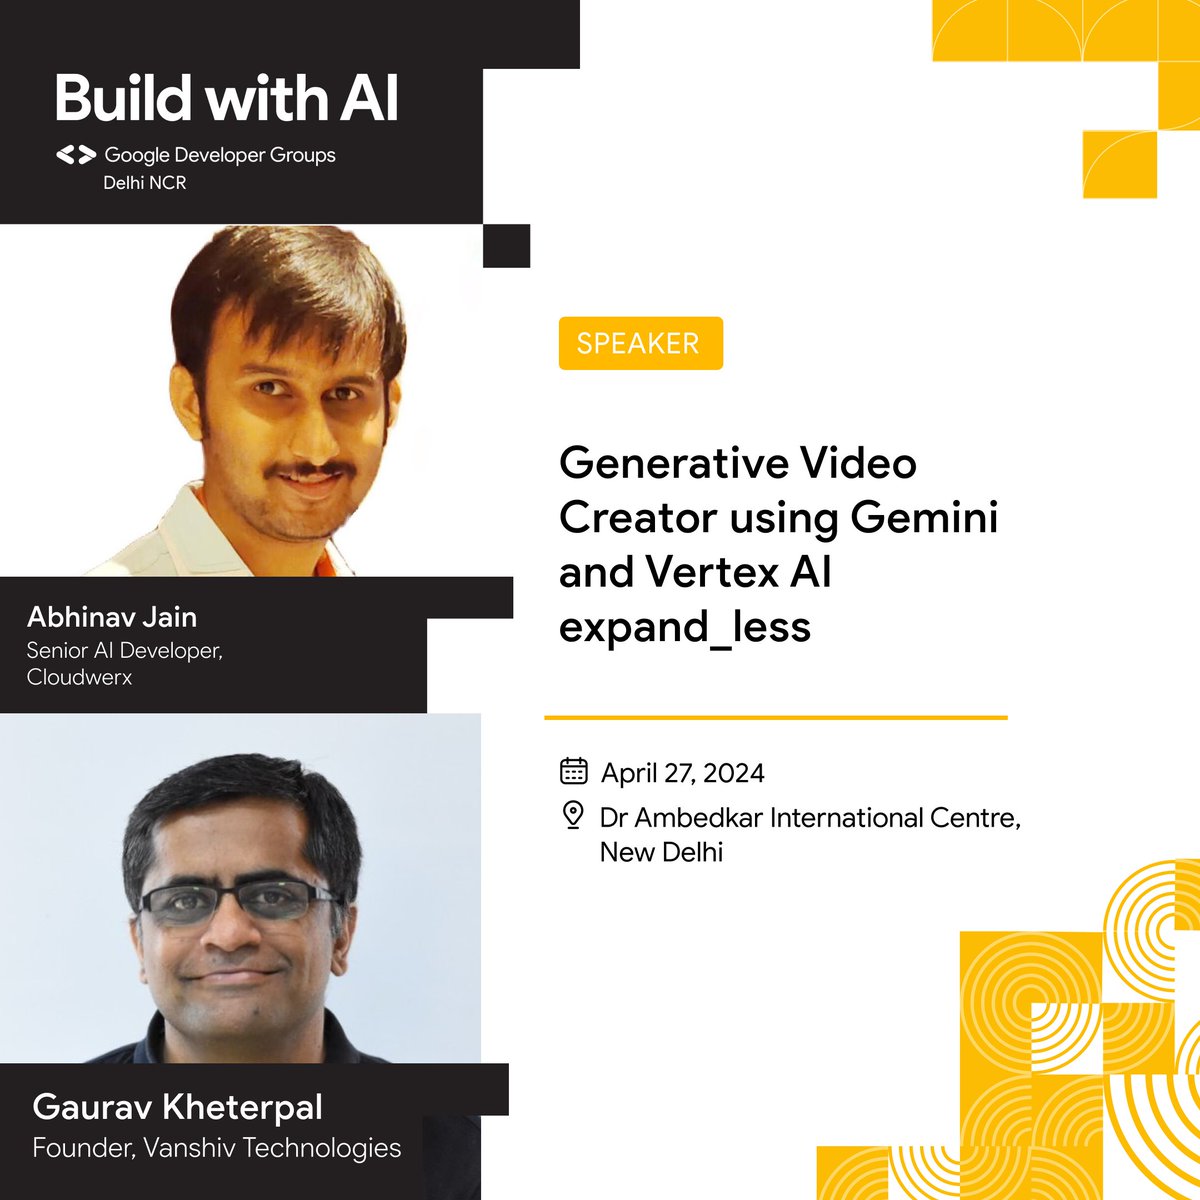 Content creators, get inspired! 🎥 Gaurav & Abhinav are our guides into the future of Generative Video using Gemini & Vertex AI. Manifest entire video realms through AI!